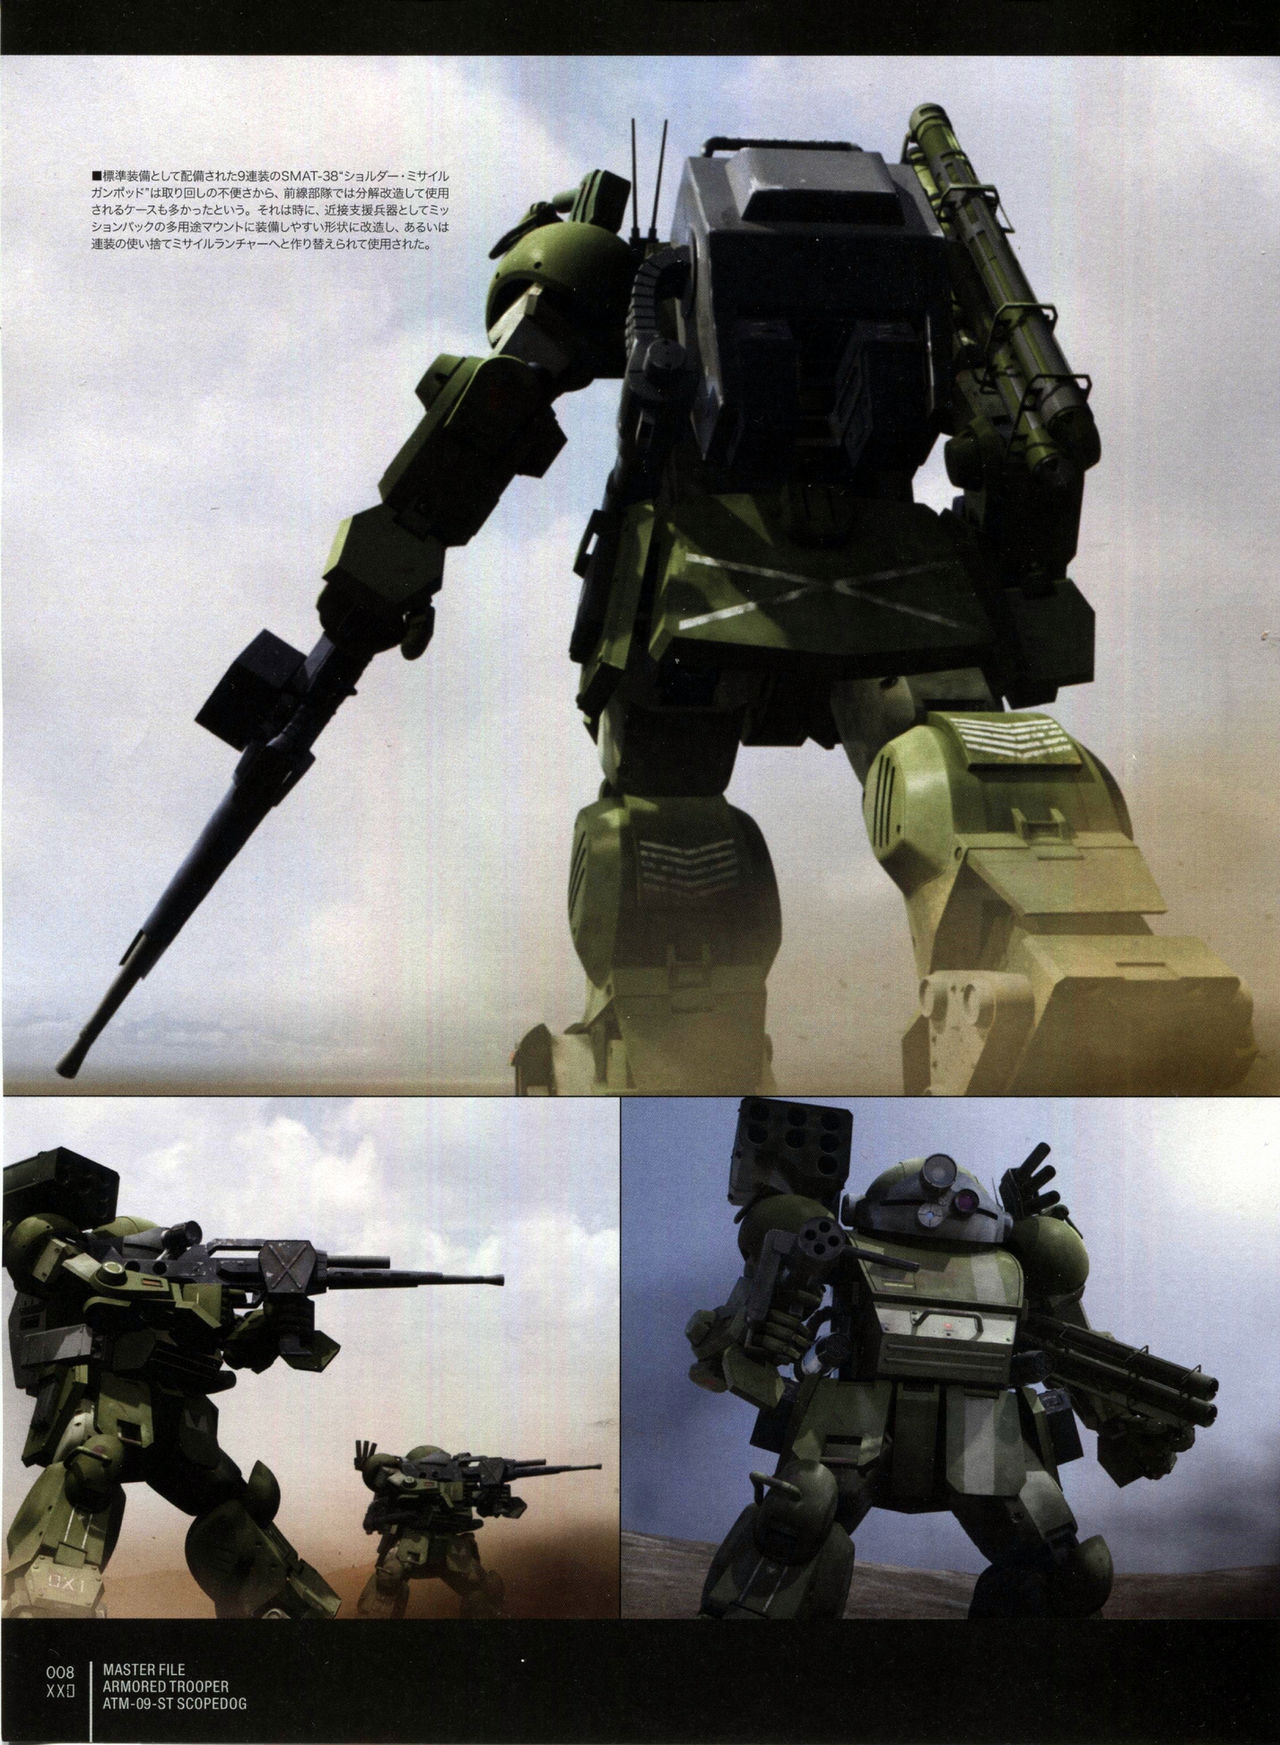 Master File - Armored Trooper AMT-09-ST Scopedog 11